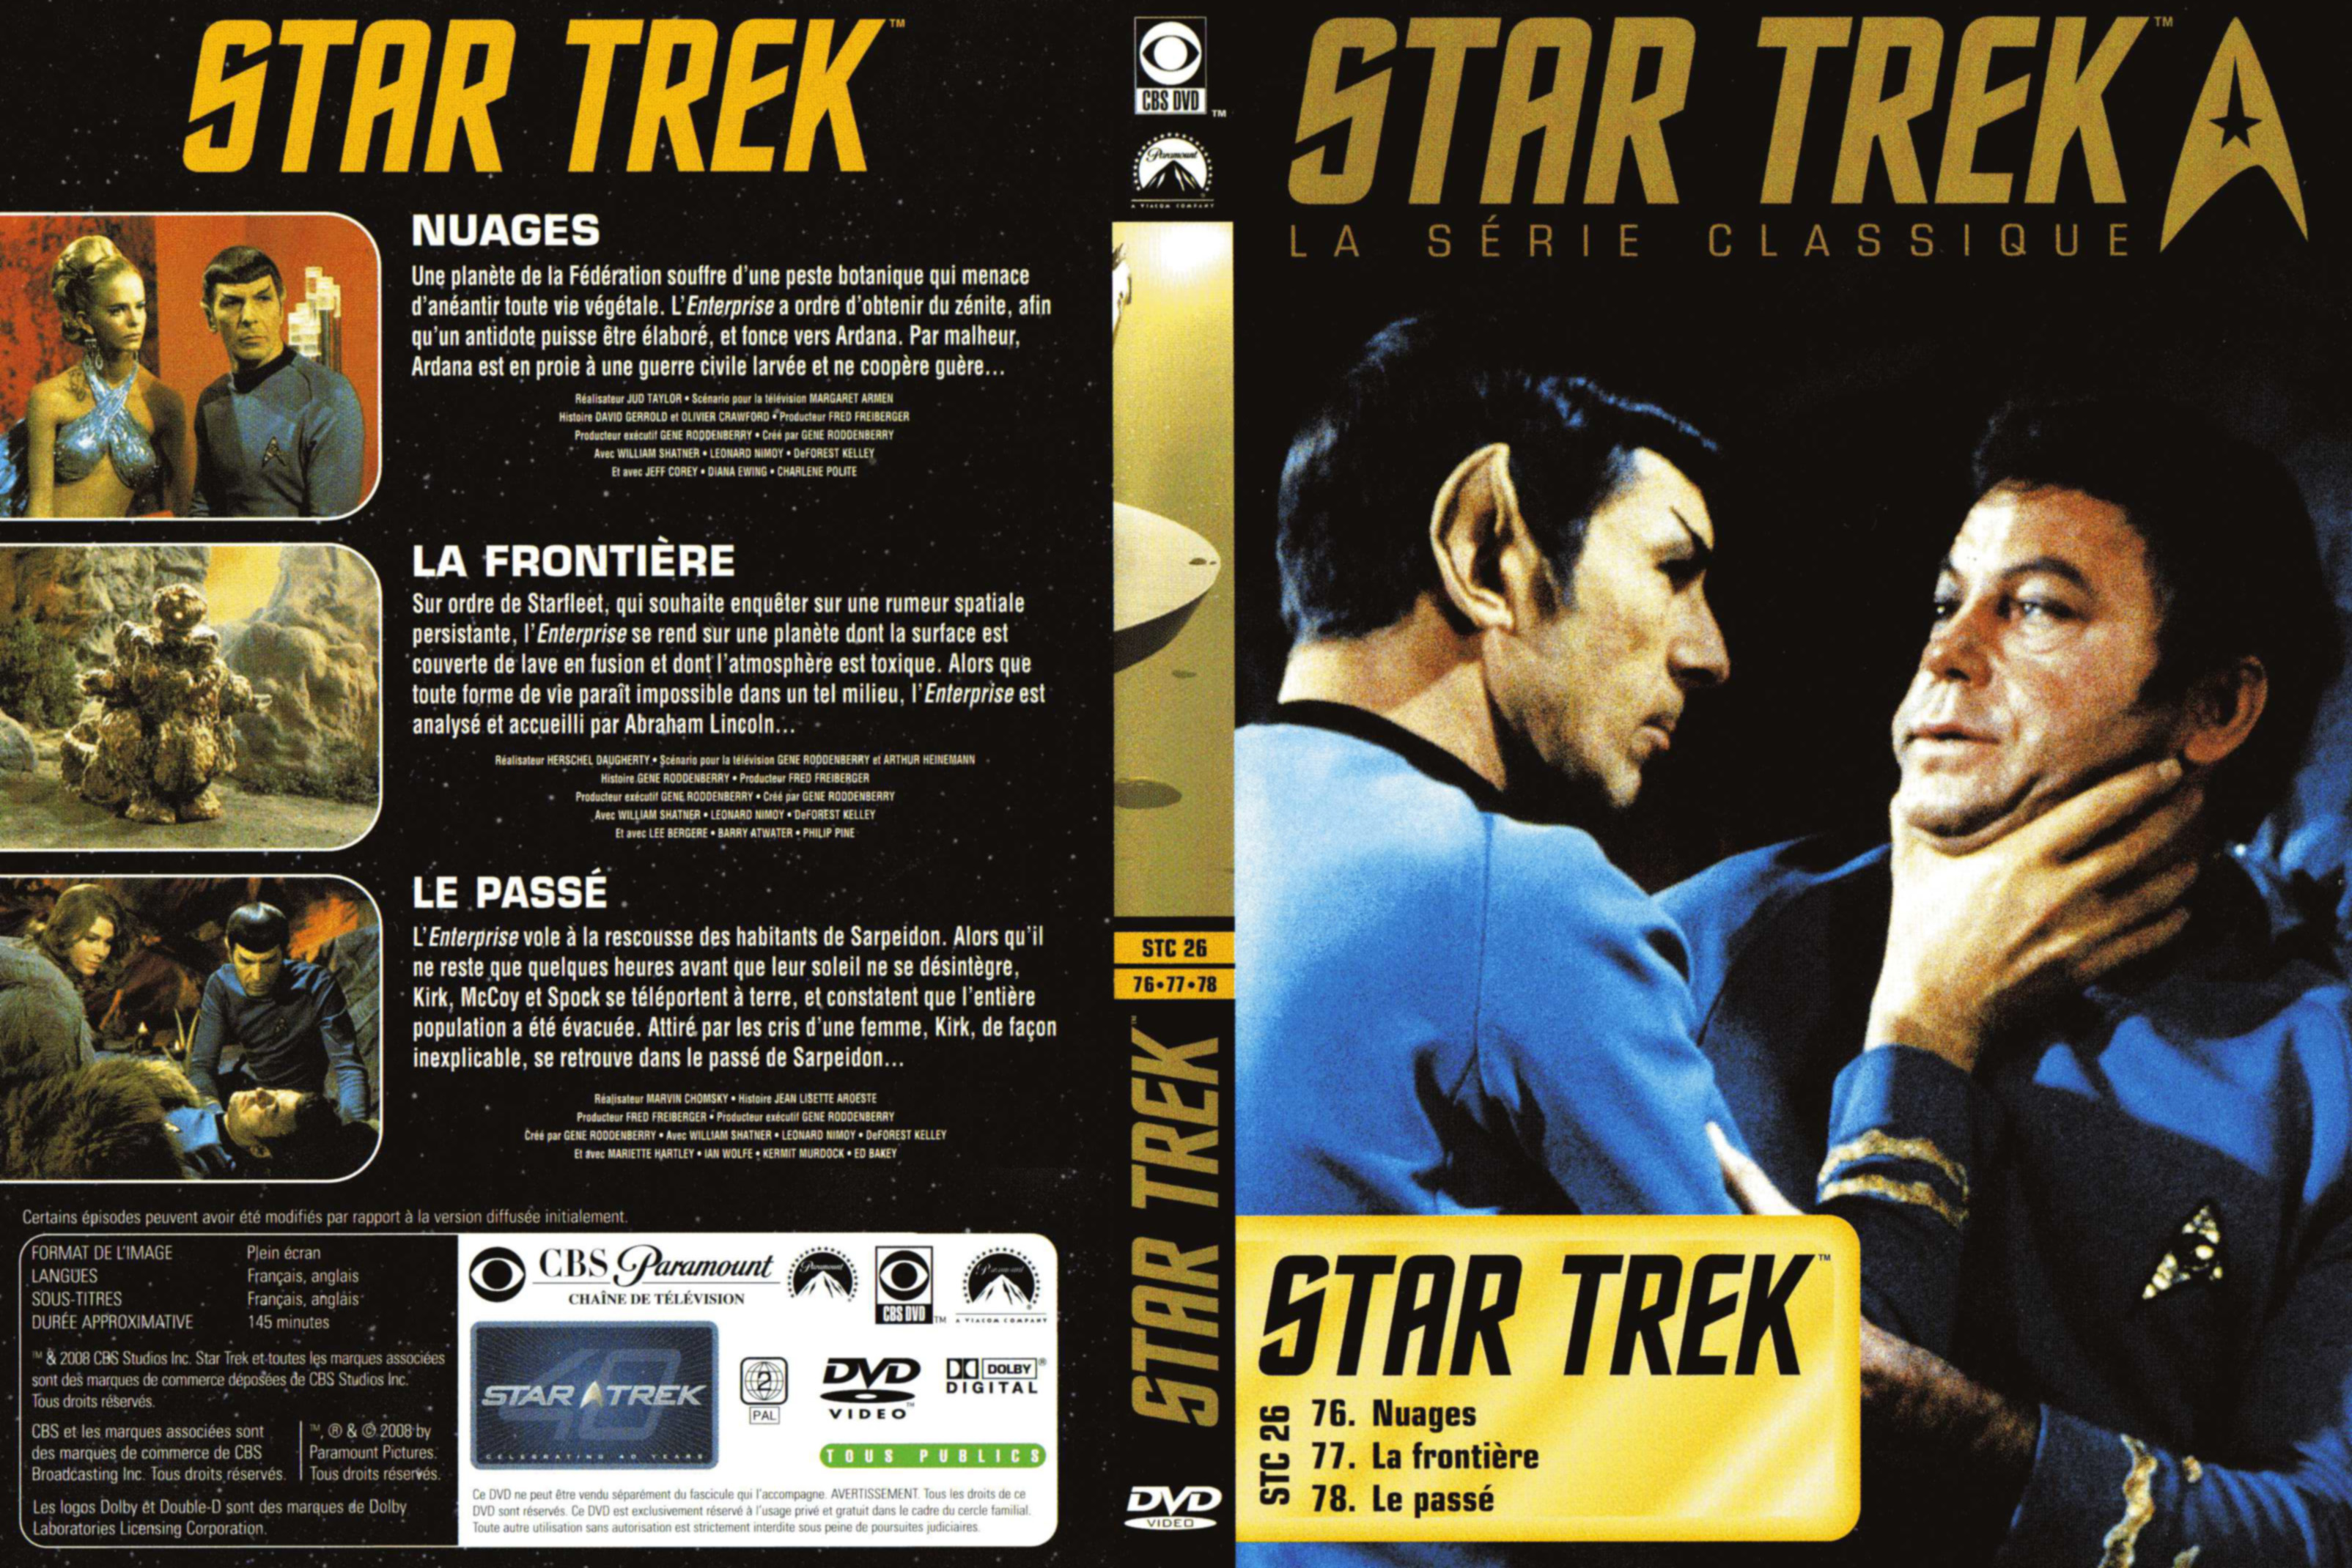 Jaquette DVD Star Trek vol 26